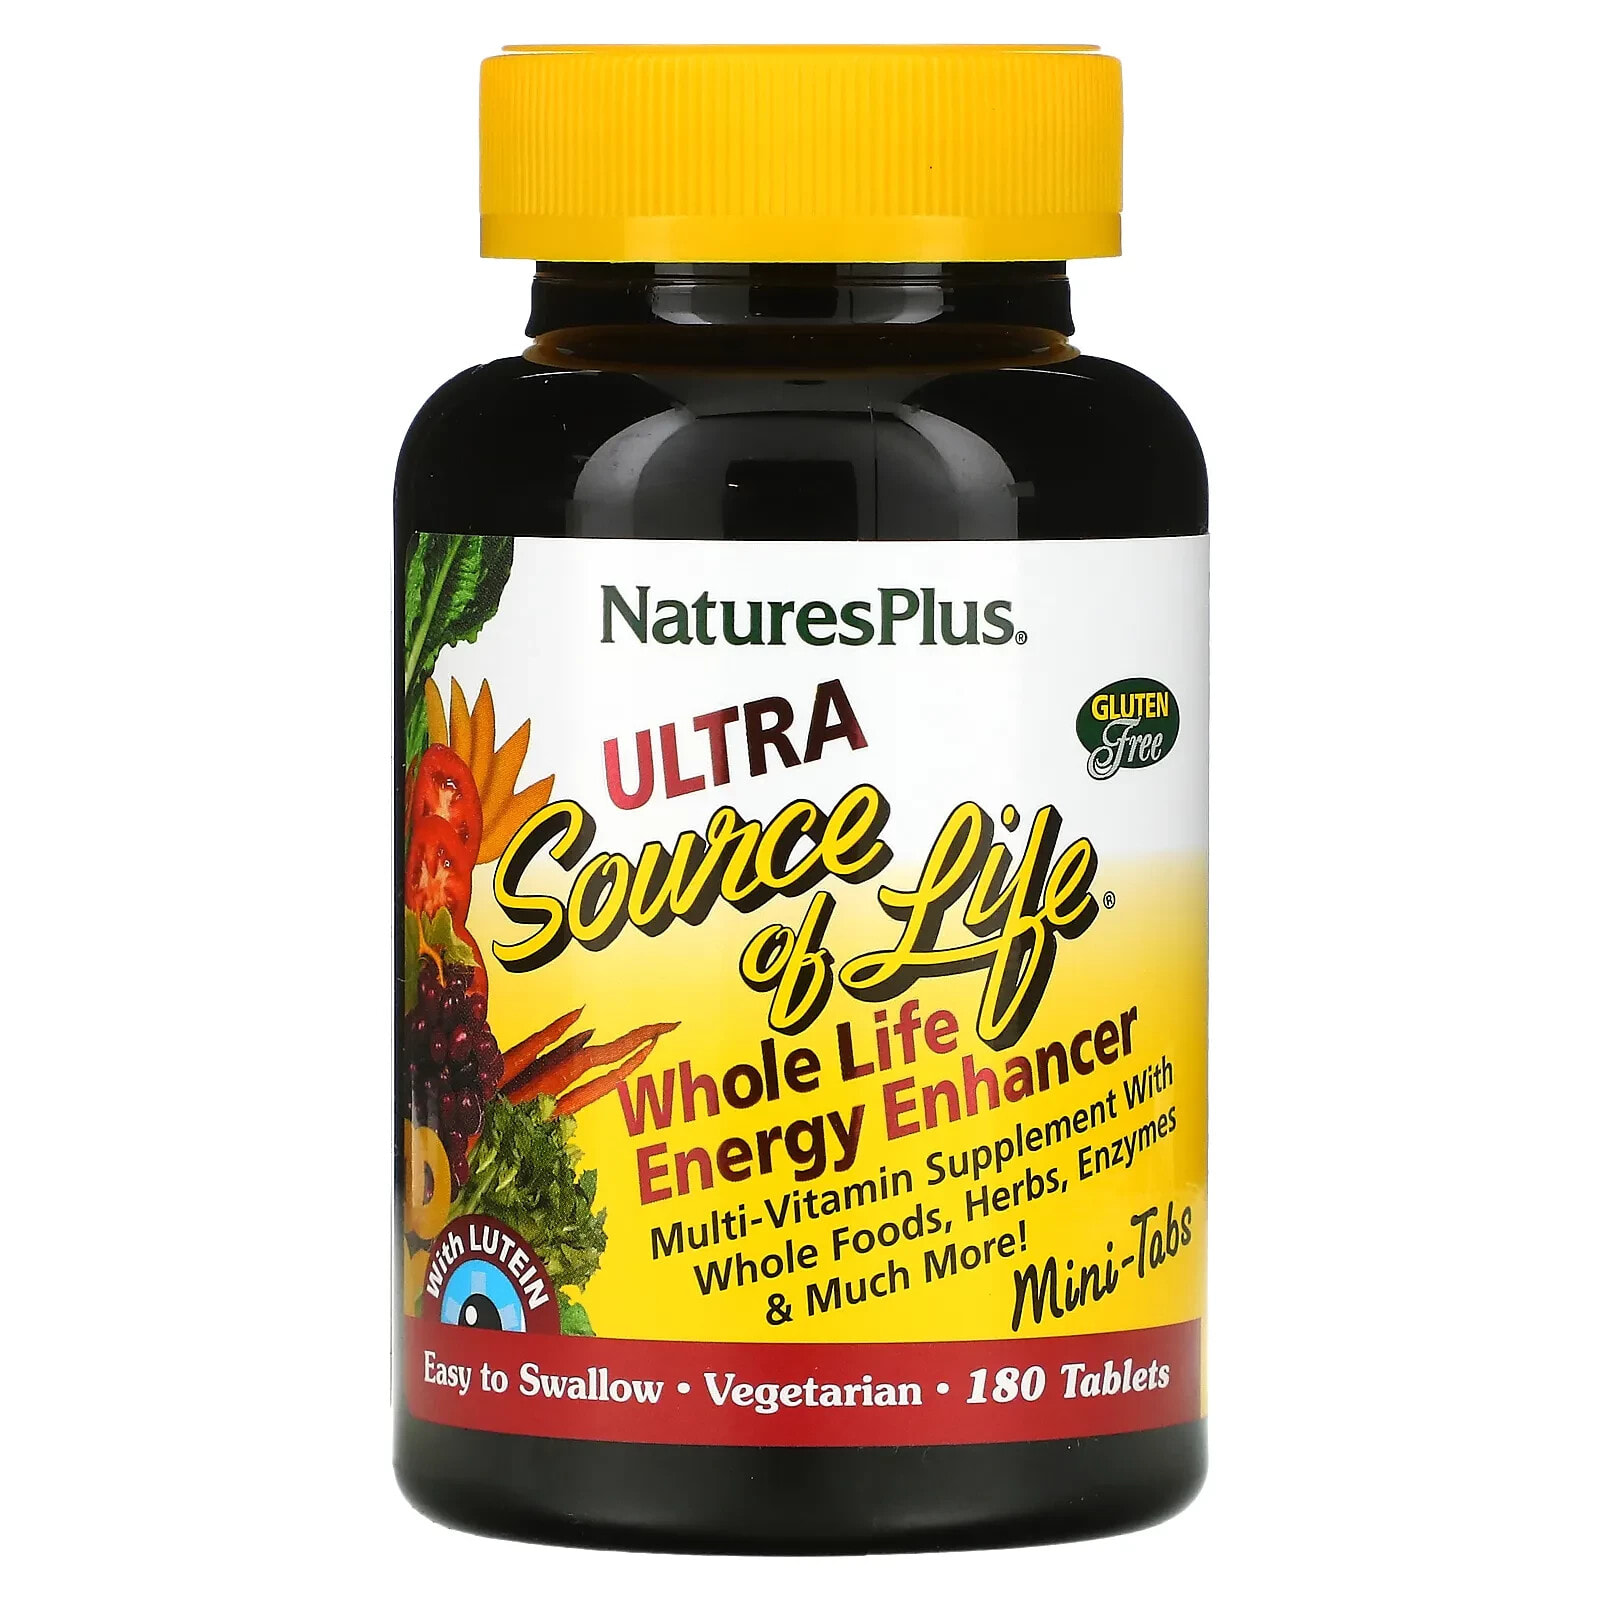 NaturesPlus, Ultra Source of Life, Whole Life Energy Enhancer, 180 Tablets